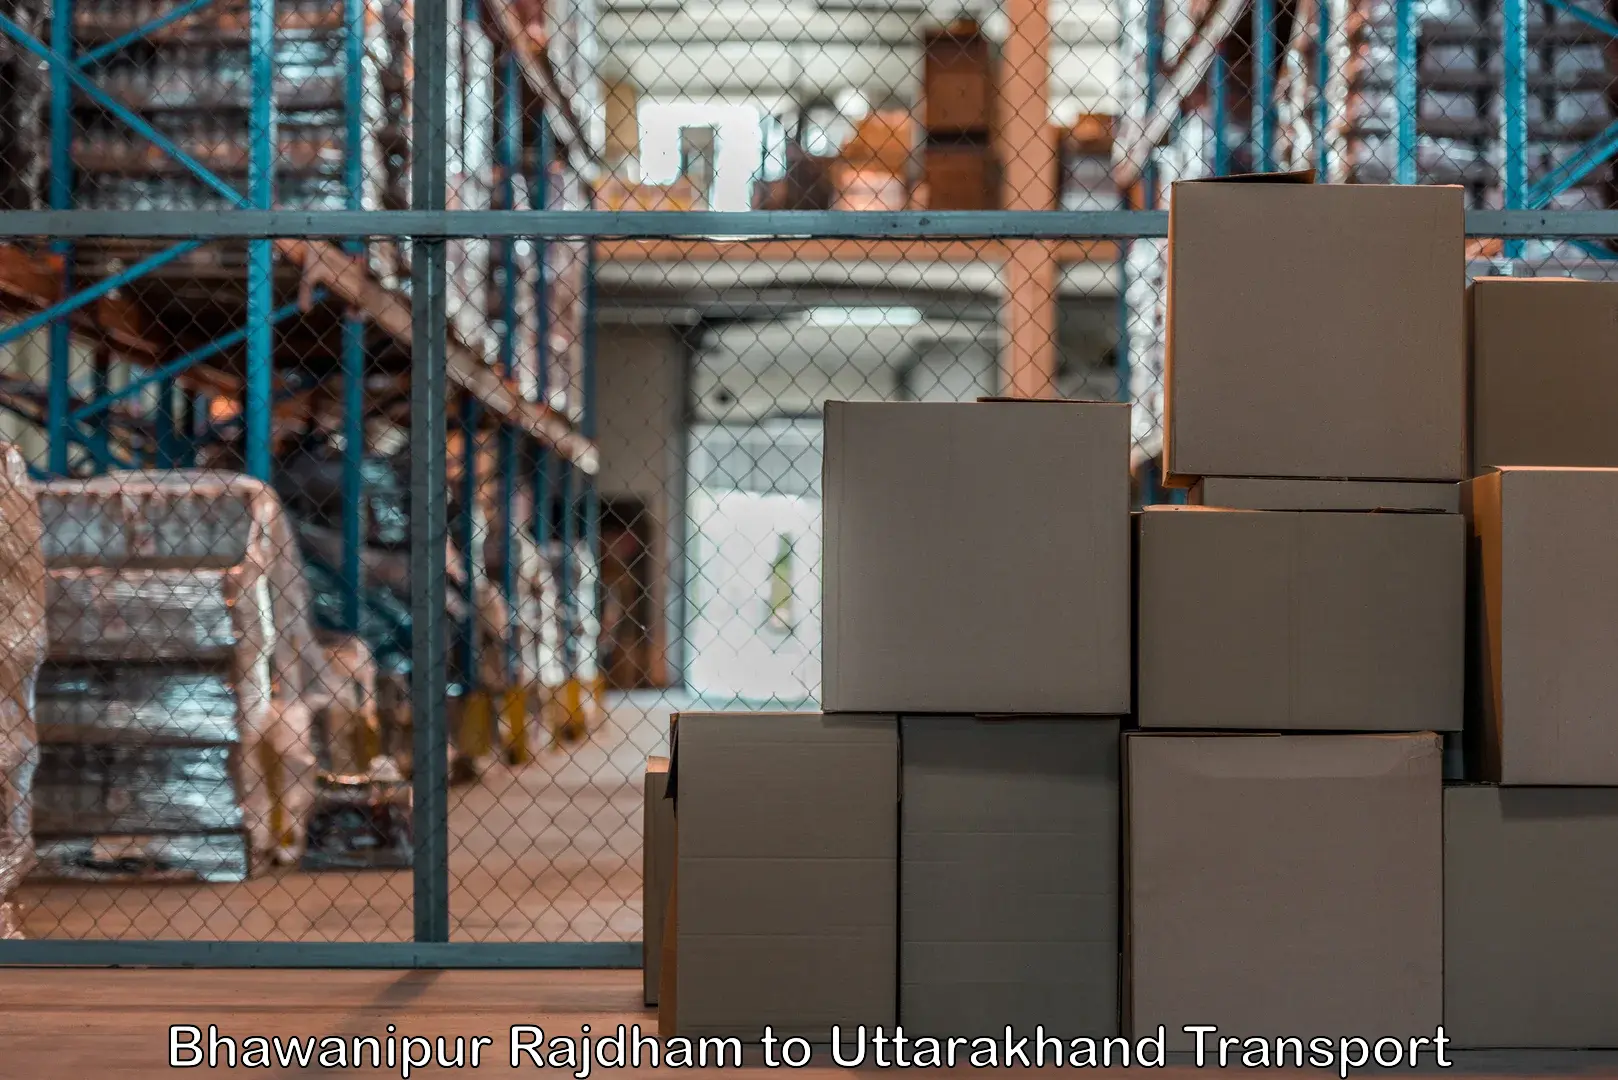 Goods delivery service Bhawanipur Rajdham to Uttarakhand